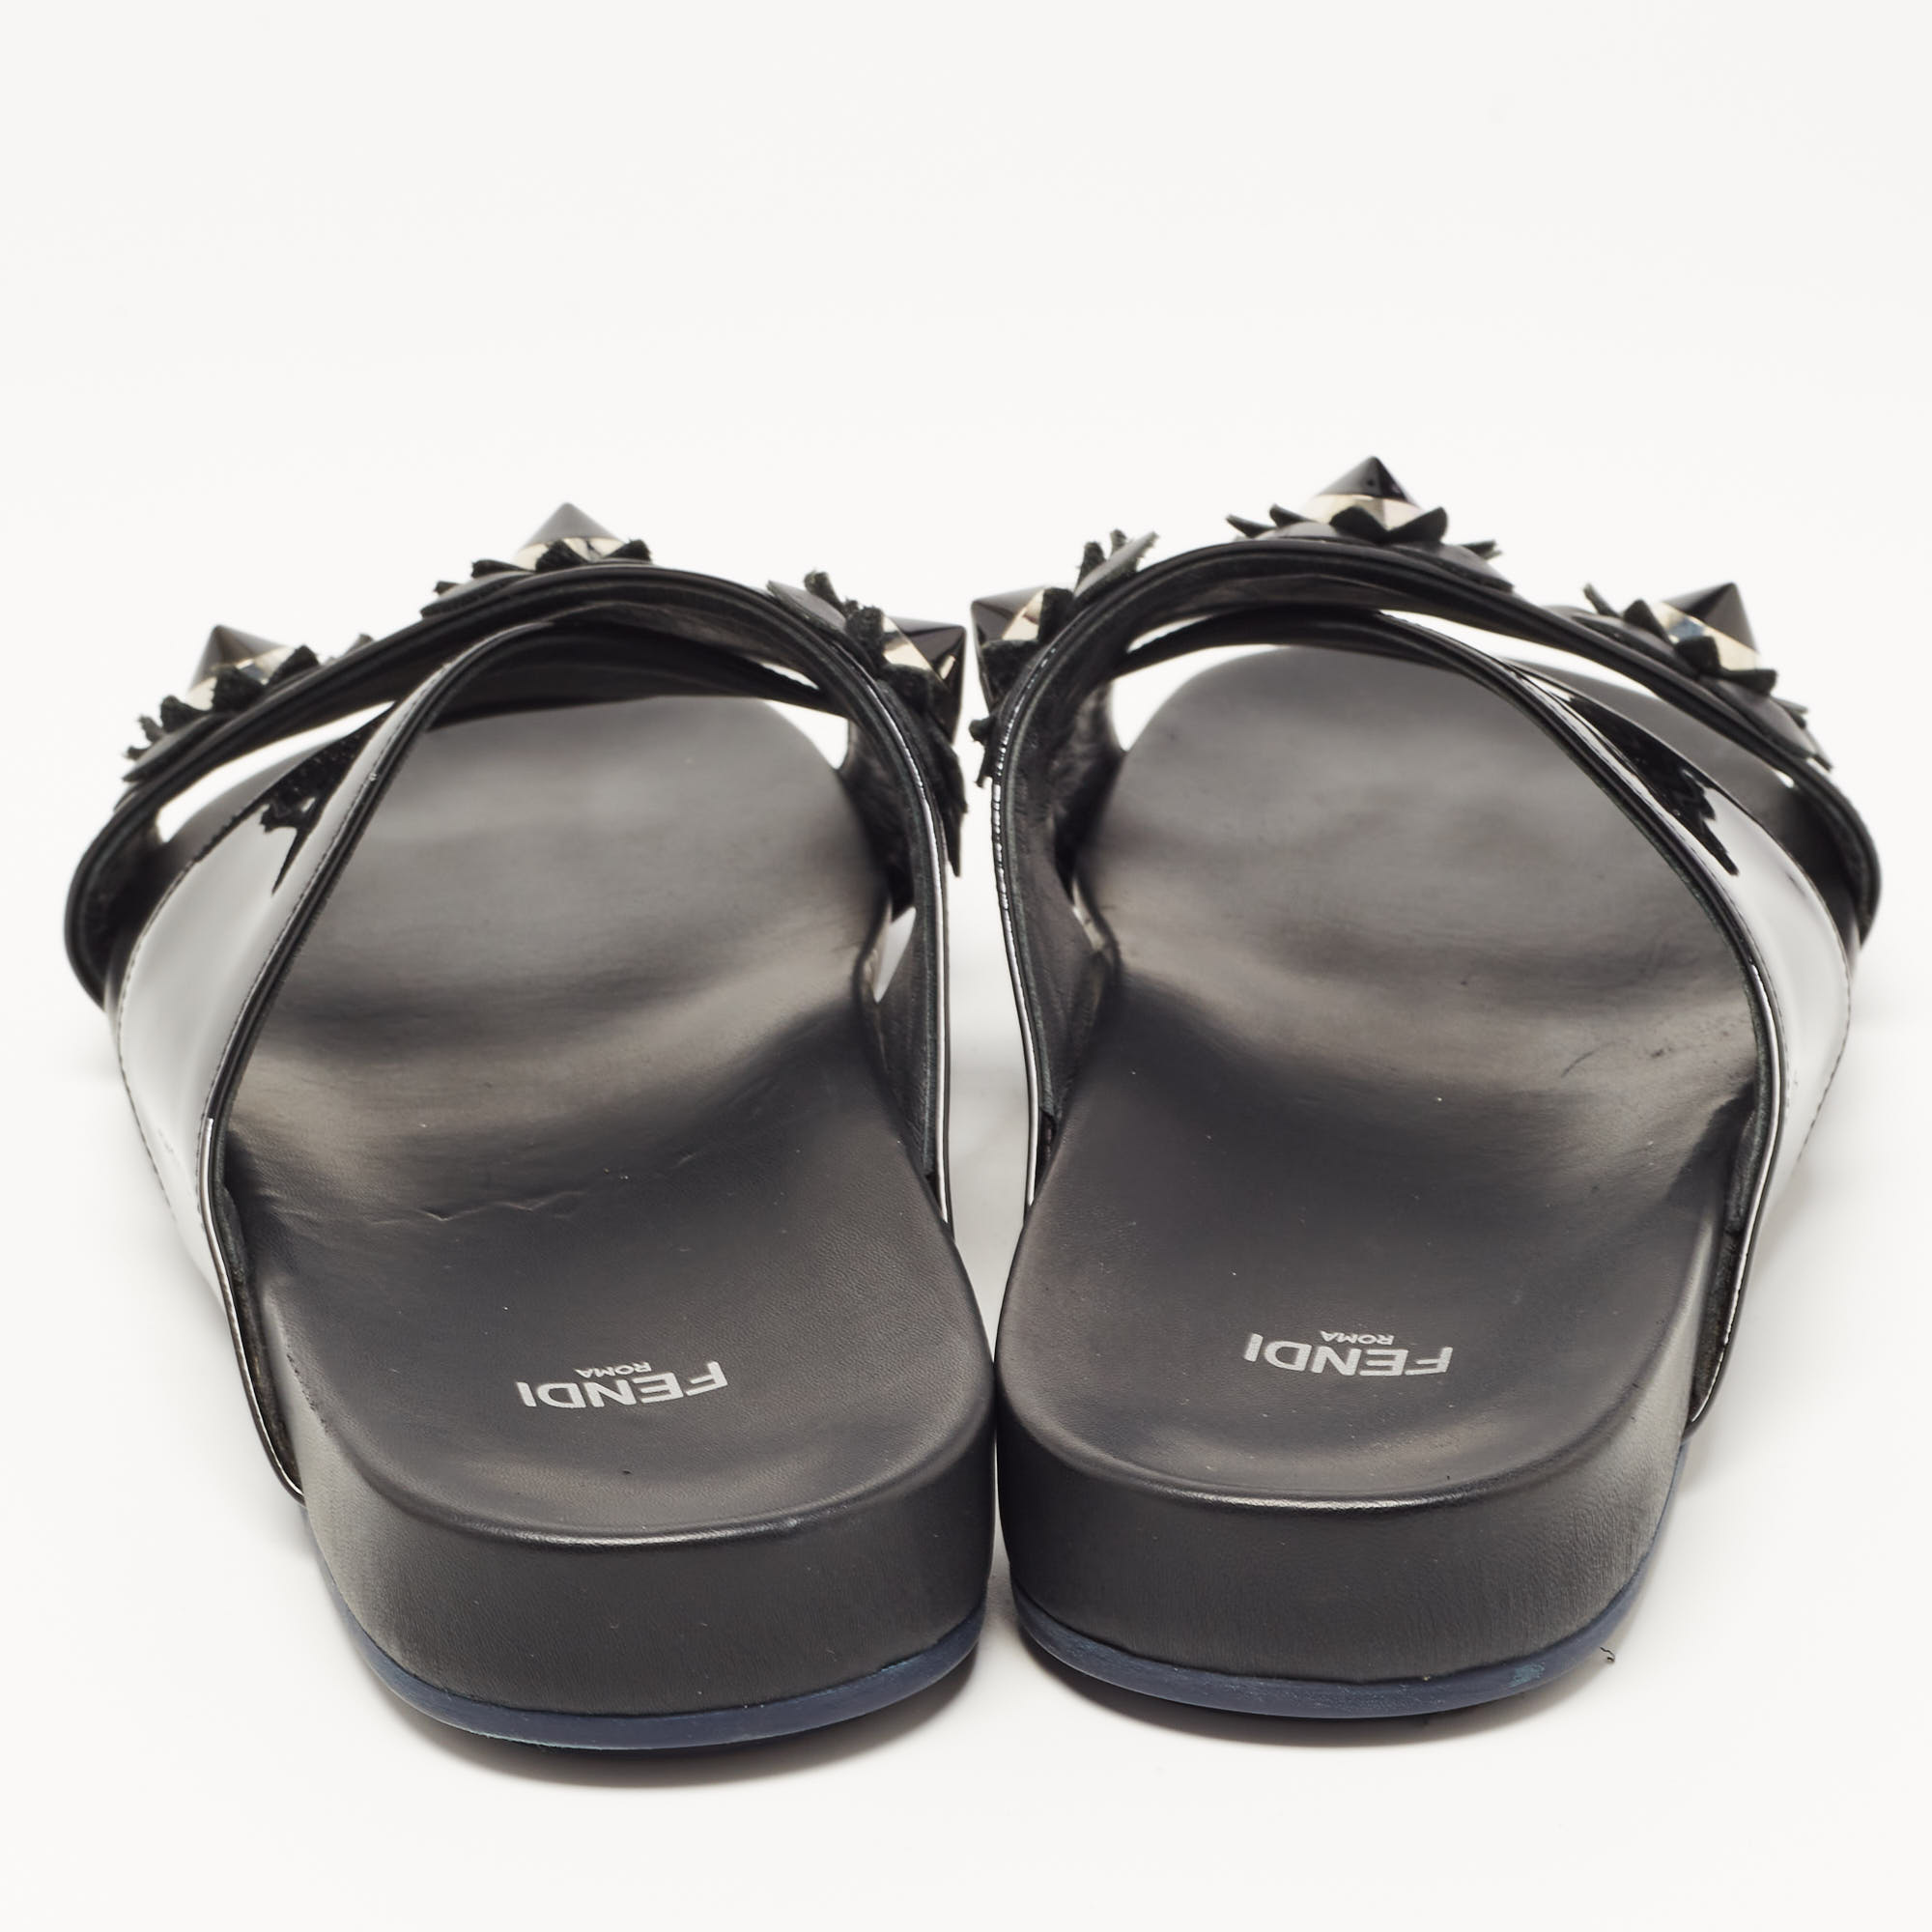 Fendi Black Patent Leather Flowerland Stud Criss Cross Flat Sandals Size 41